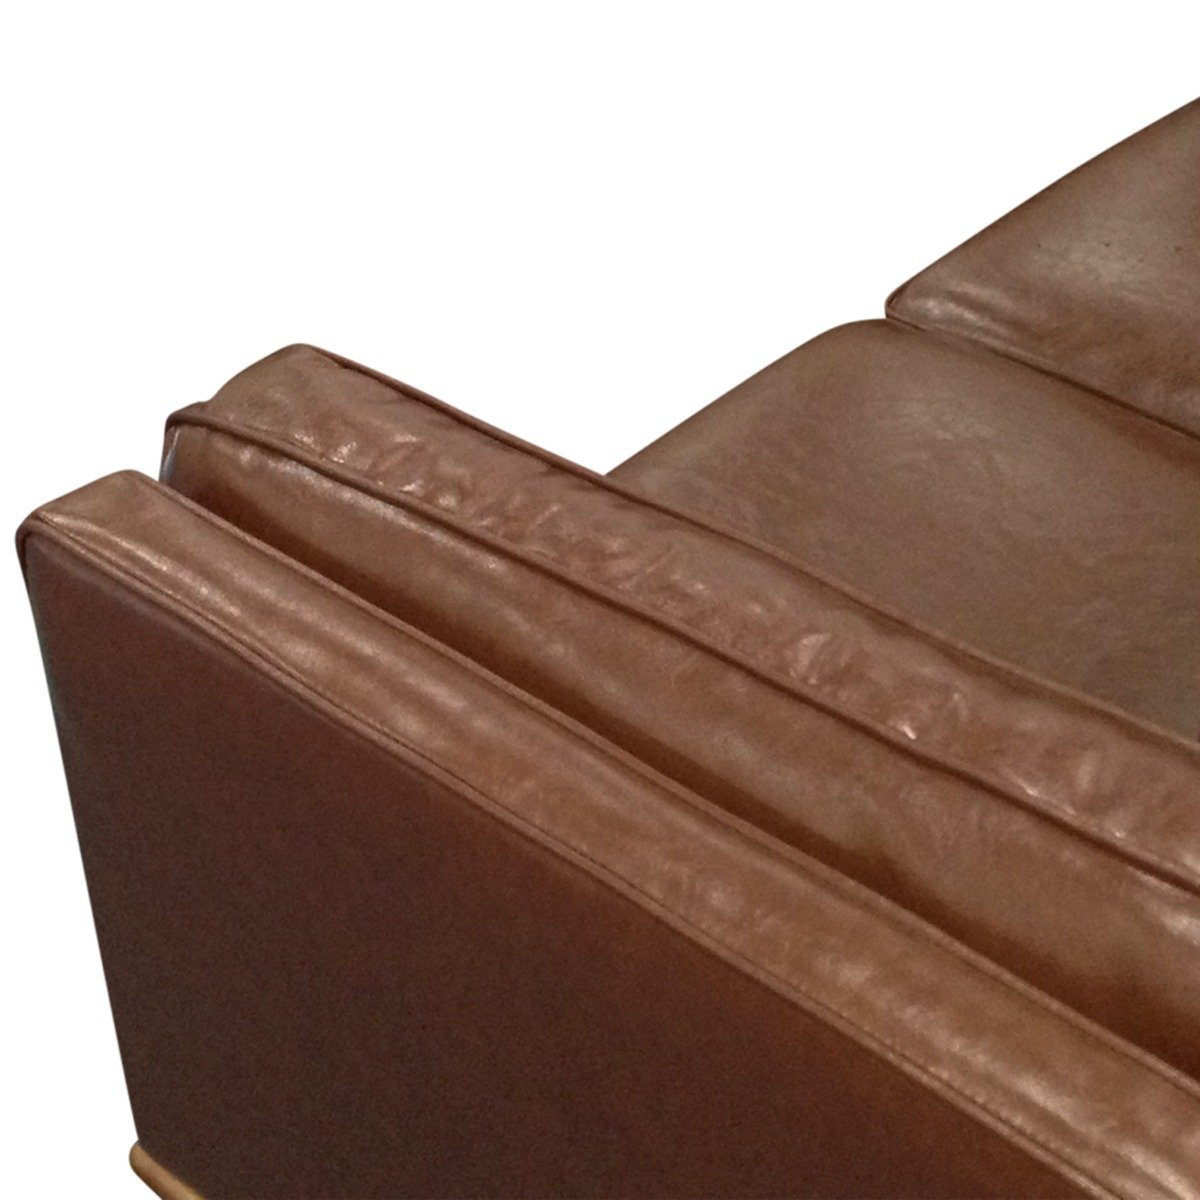 Sofas 3 Seater Stylish Leatherette Brown York Sofa